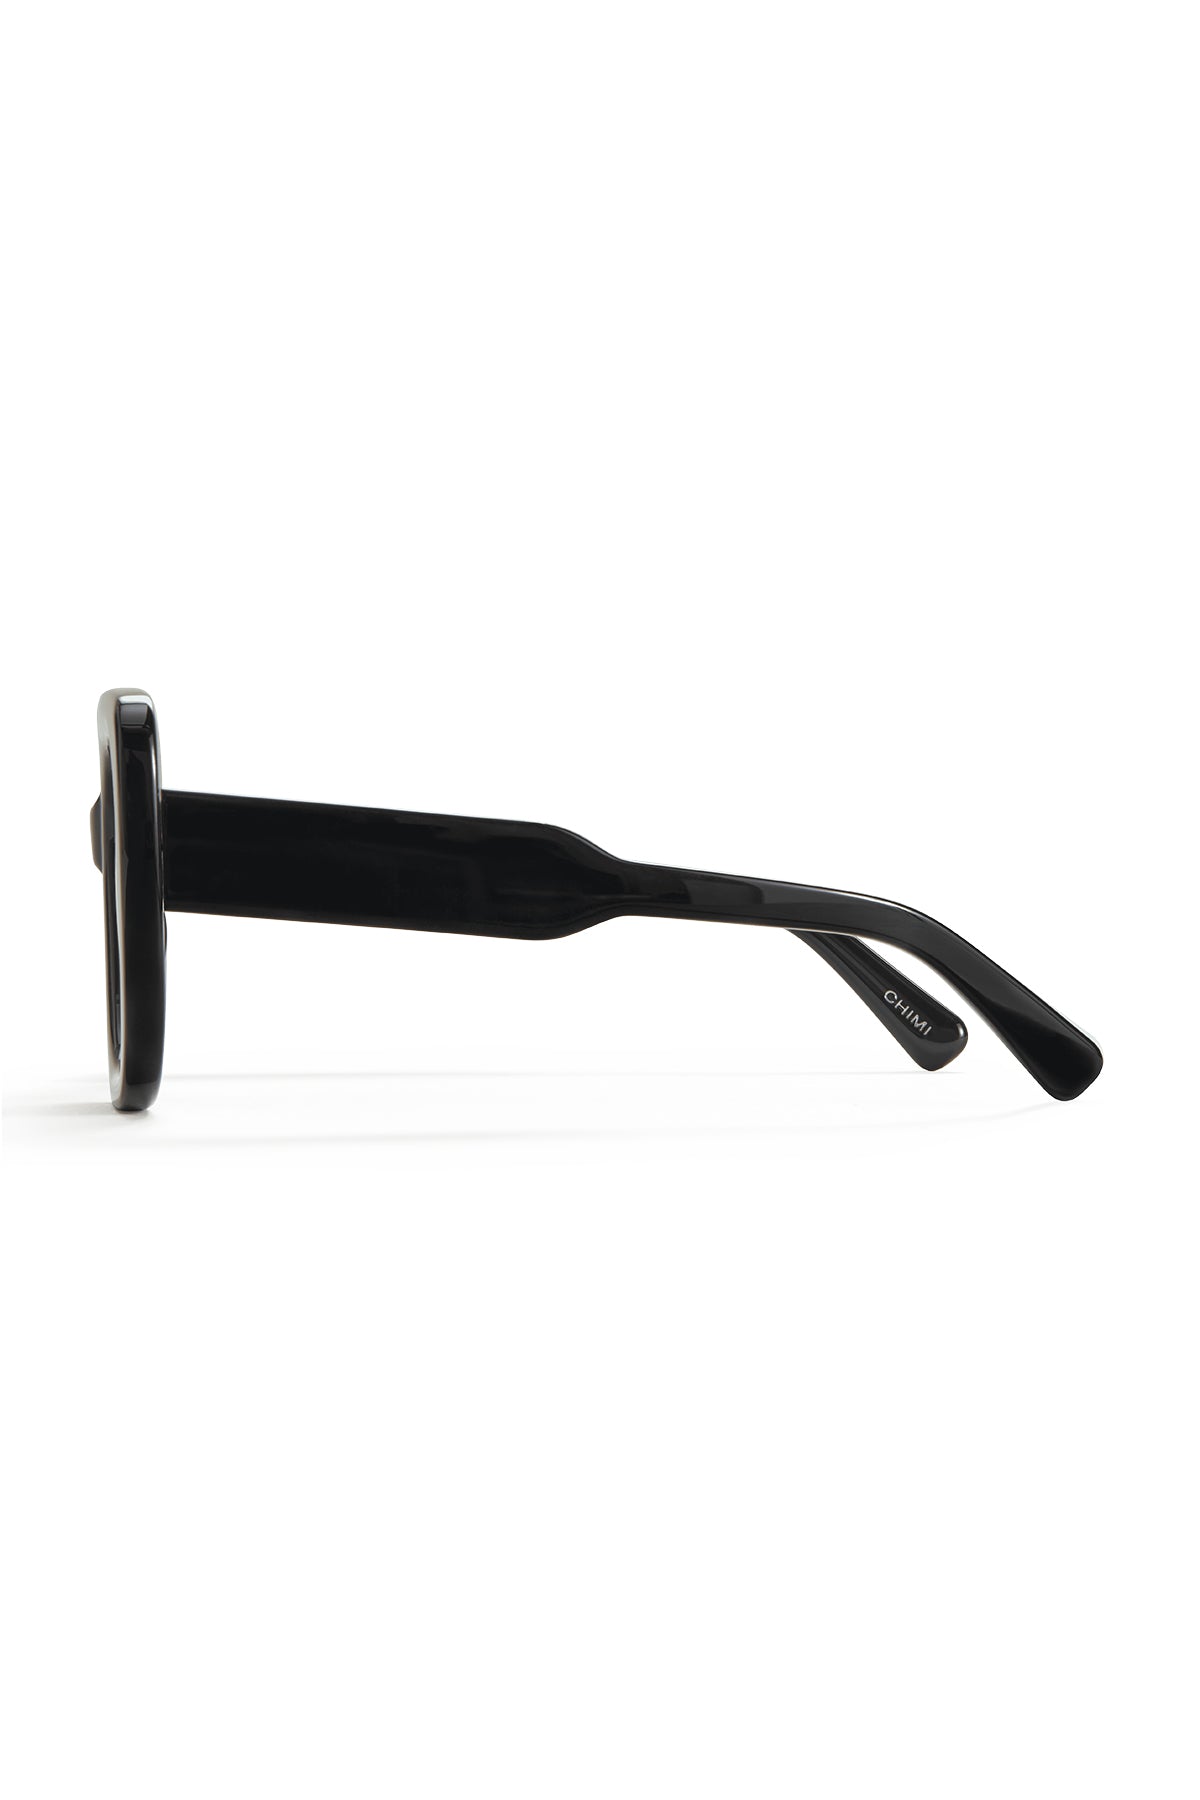 Chimi 10 Sunglasses Black Side-22132677050561